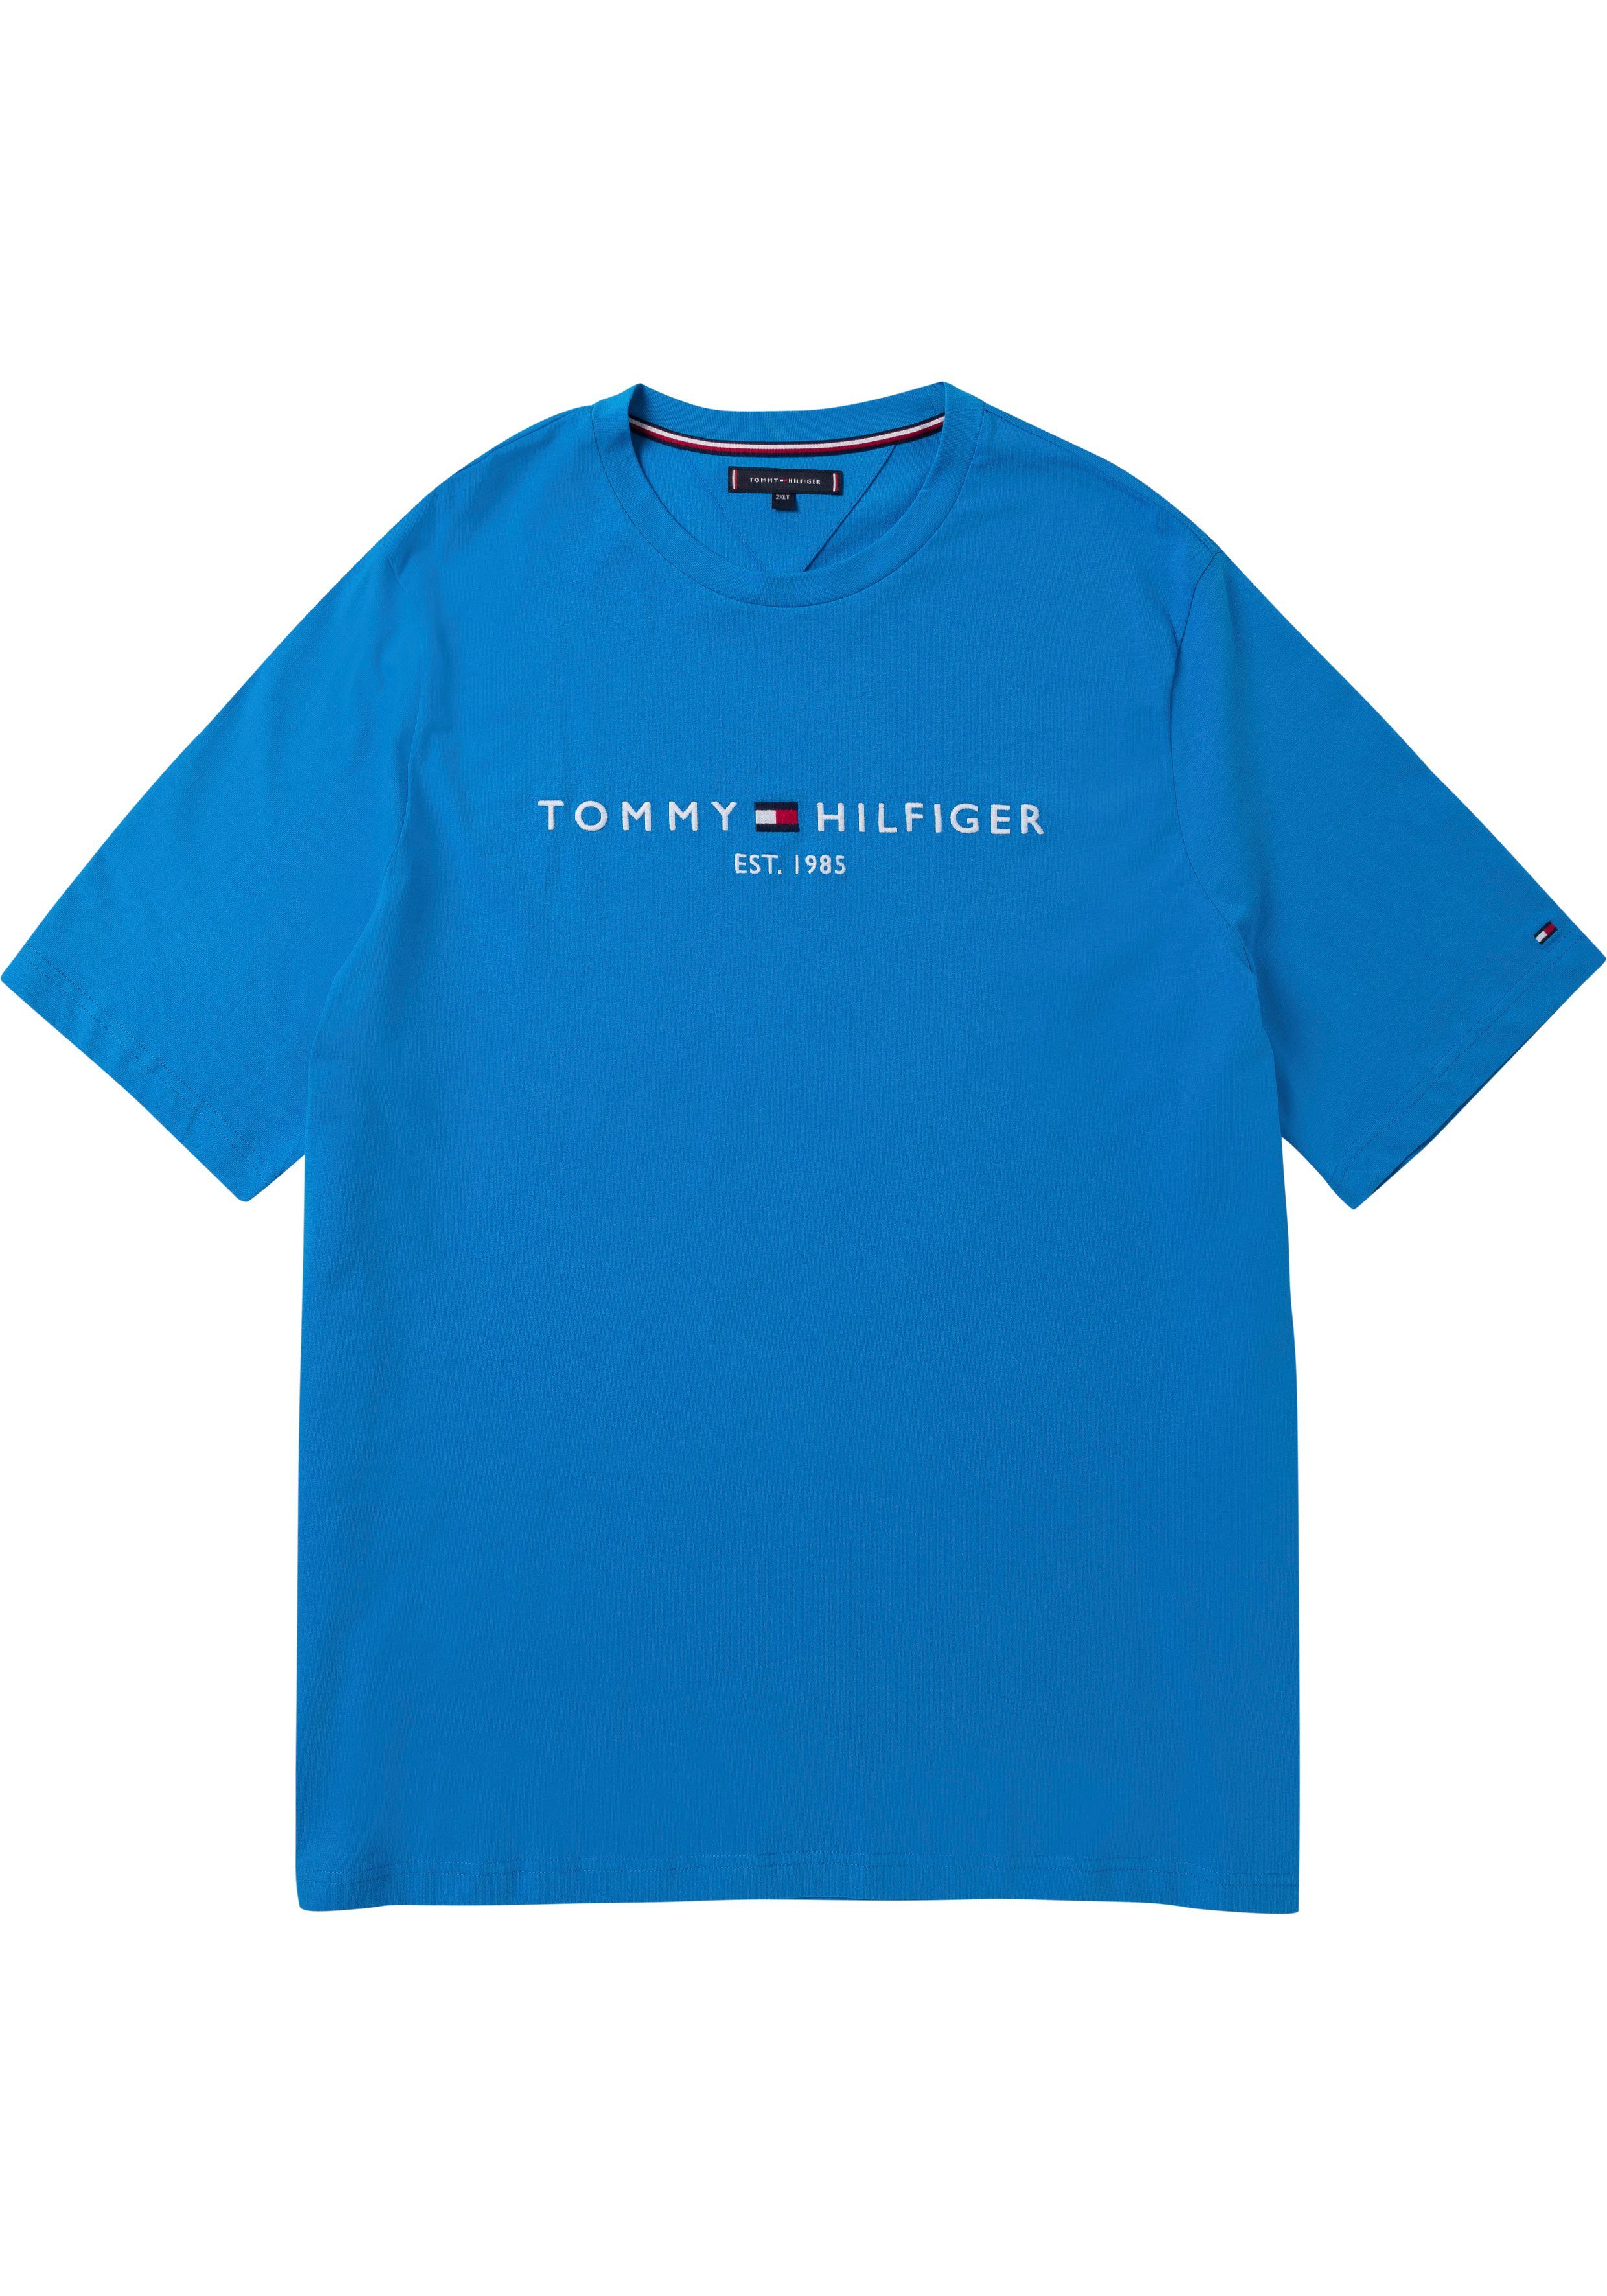 T-Shirt LOGO Tommy TEE-B auf Logoschriftzug Brust azurblau Hilfiger Big mit BT-TOMMY der Tommy Hilfiger Tall &